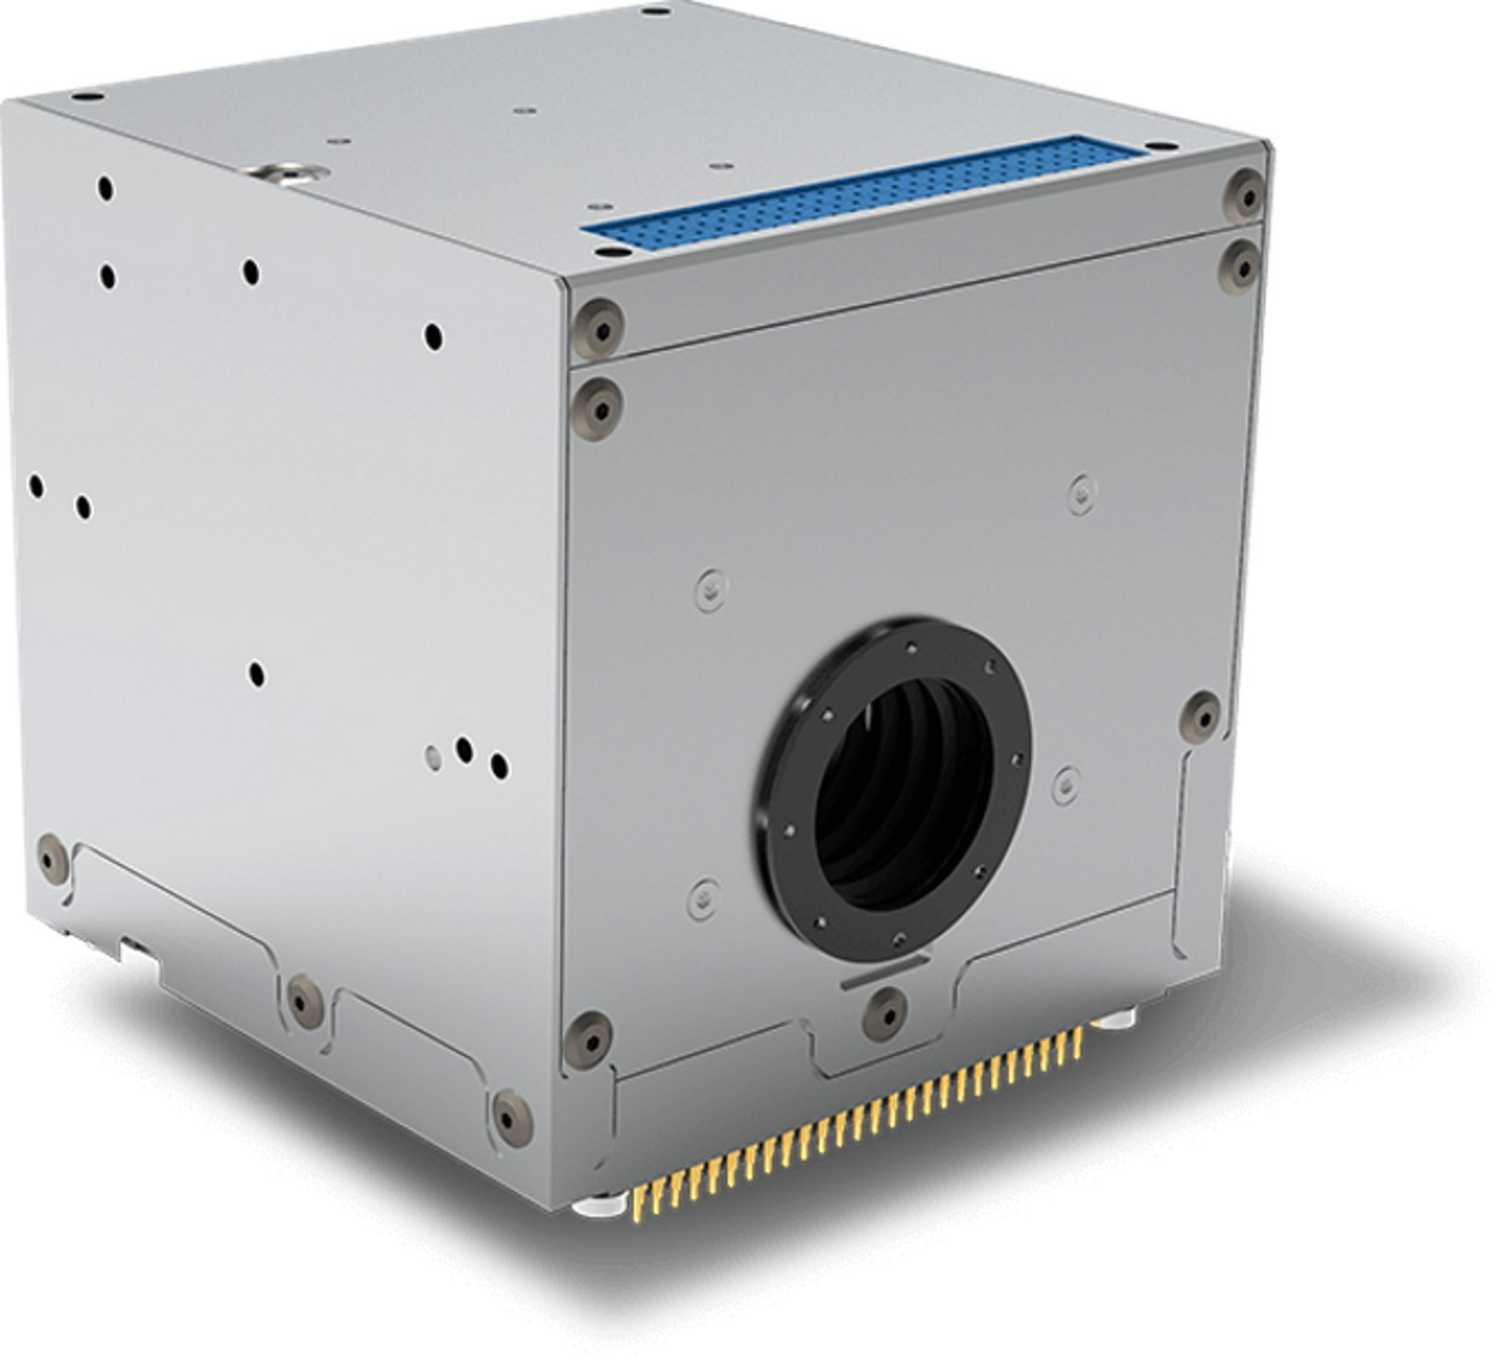 CubeCAT: flight proven compact terminal for laser satellite communication